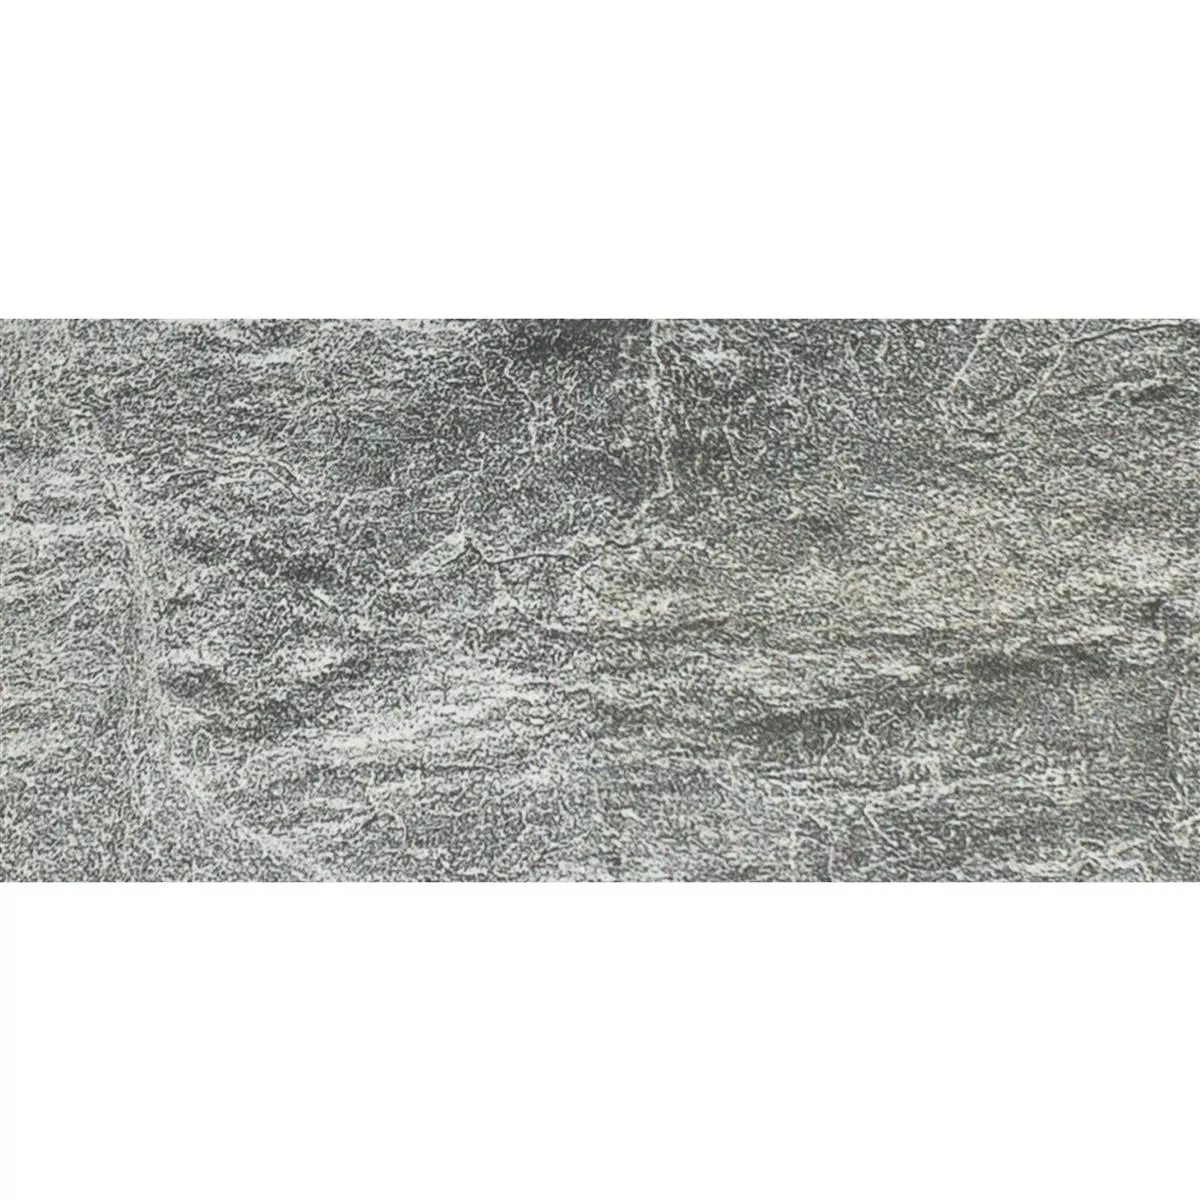 Sample Wall Tiles Reymond Waved Anthracite 6x25cm